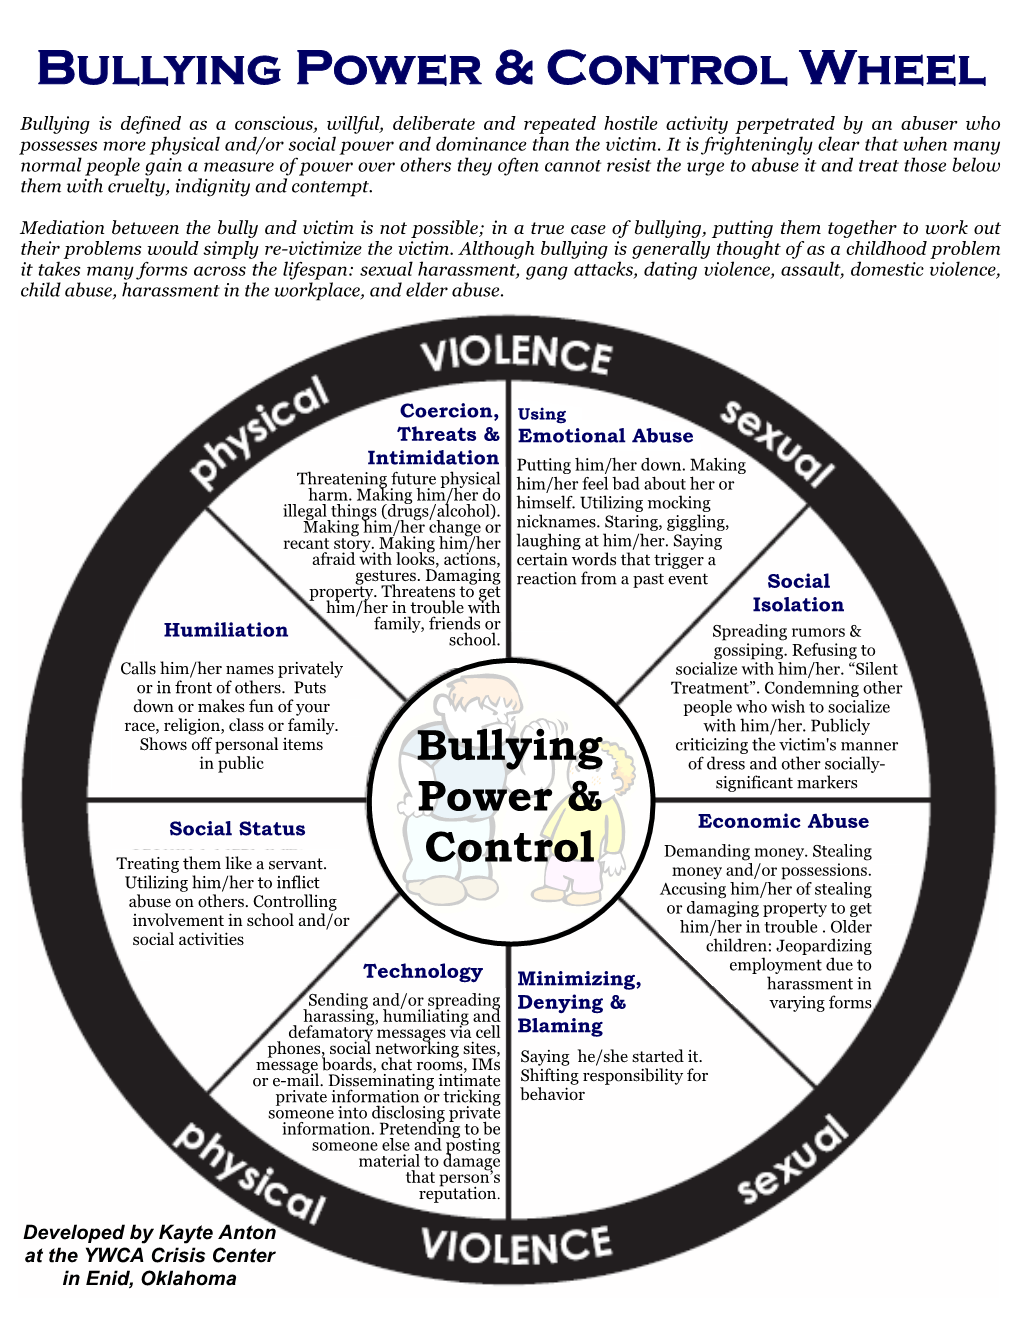 Bullying Power & Control Wheel